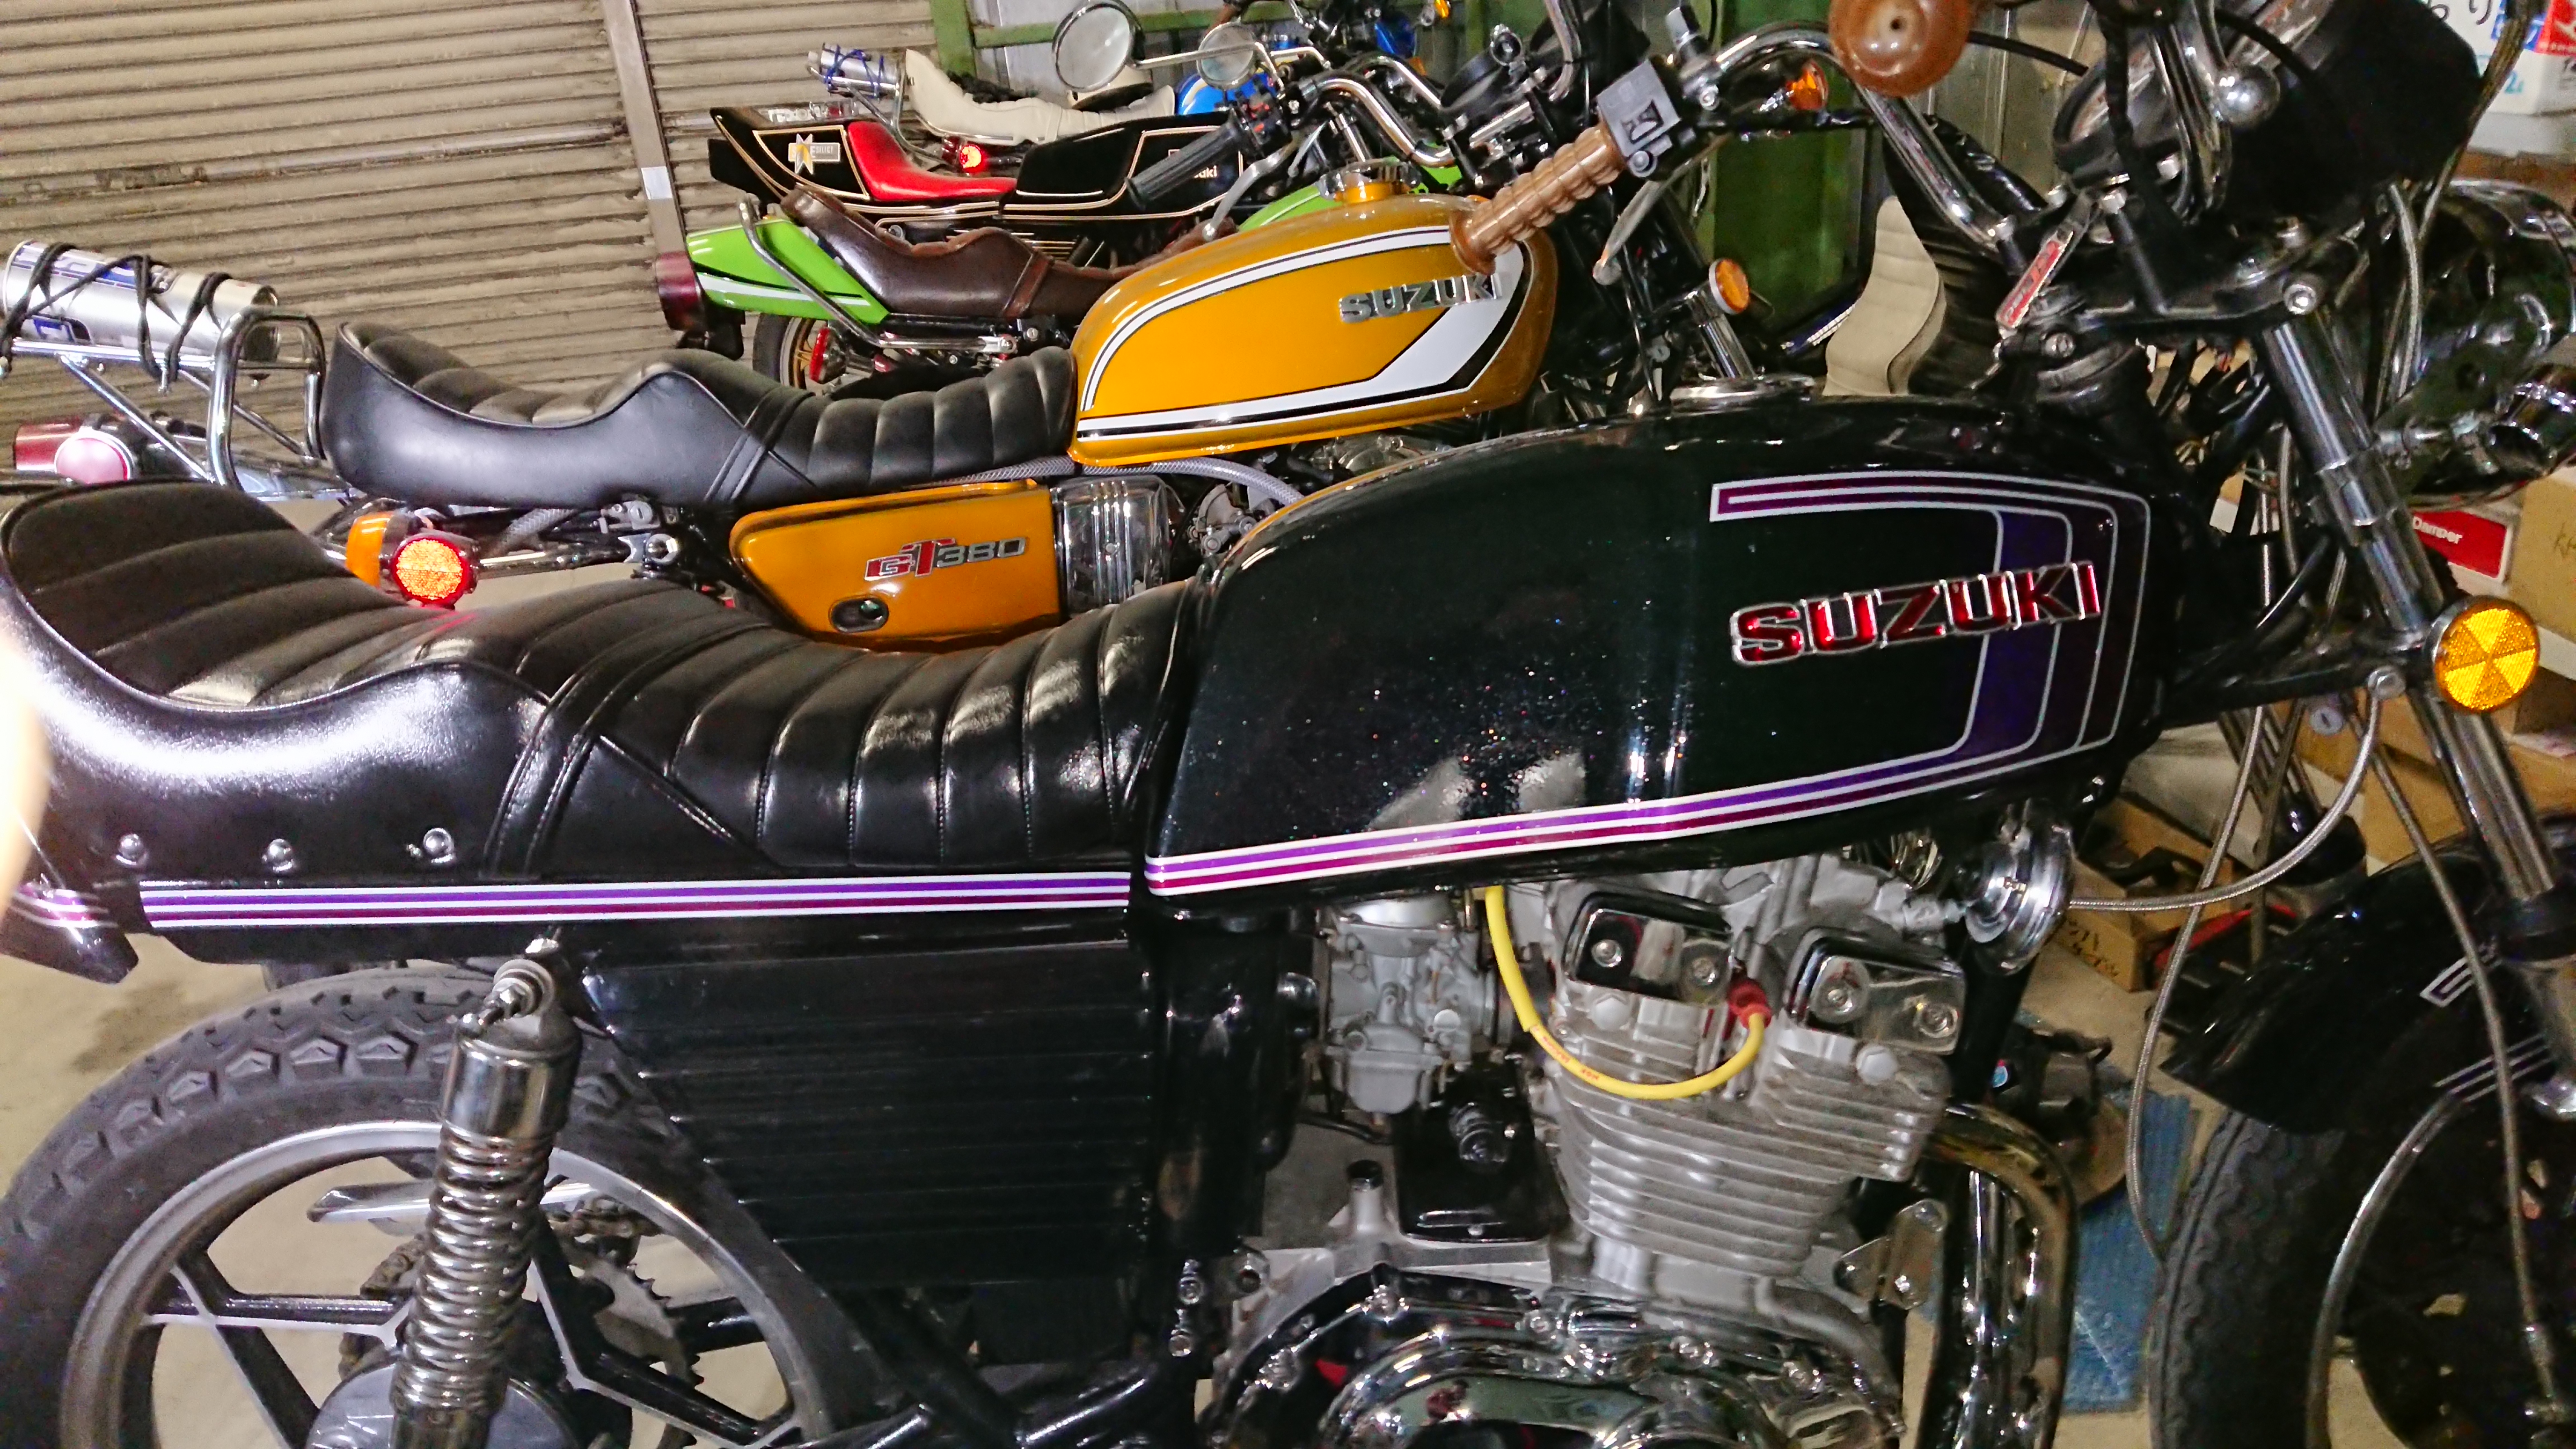 GSX250E ザリ 納車。 | GS400 旧車バイクのブログ@王鈴